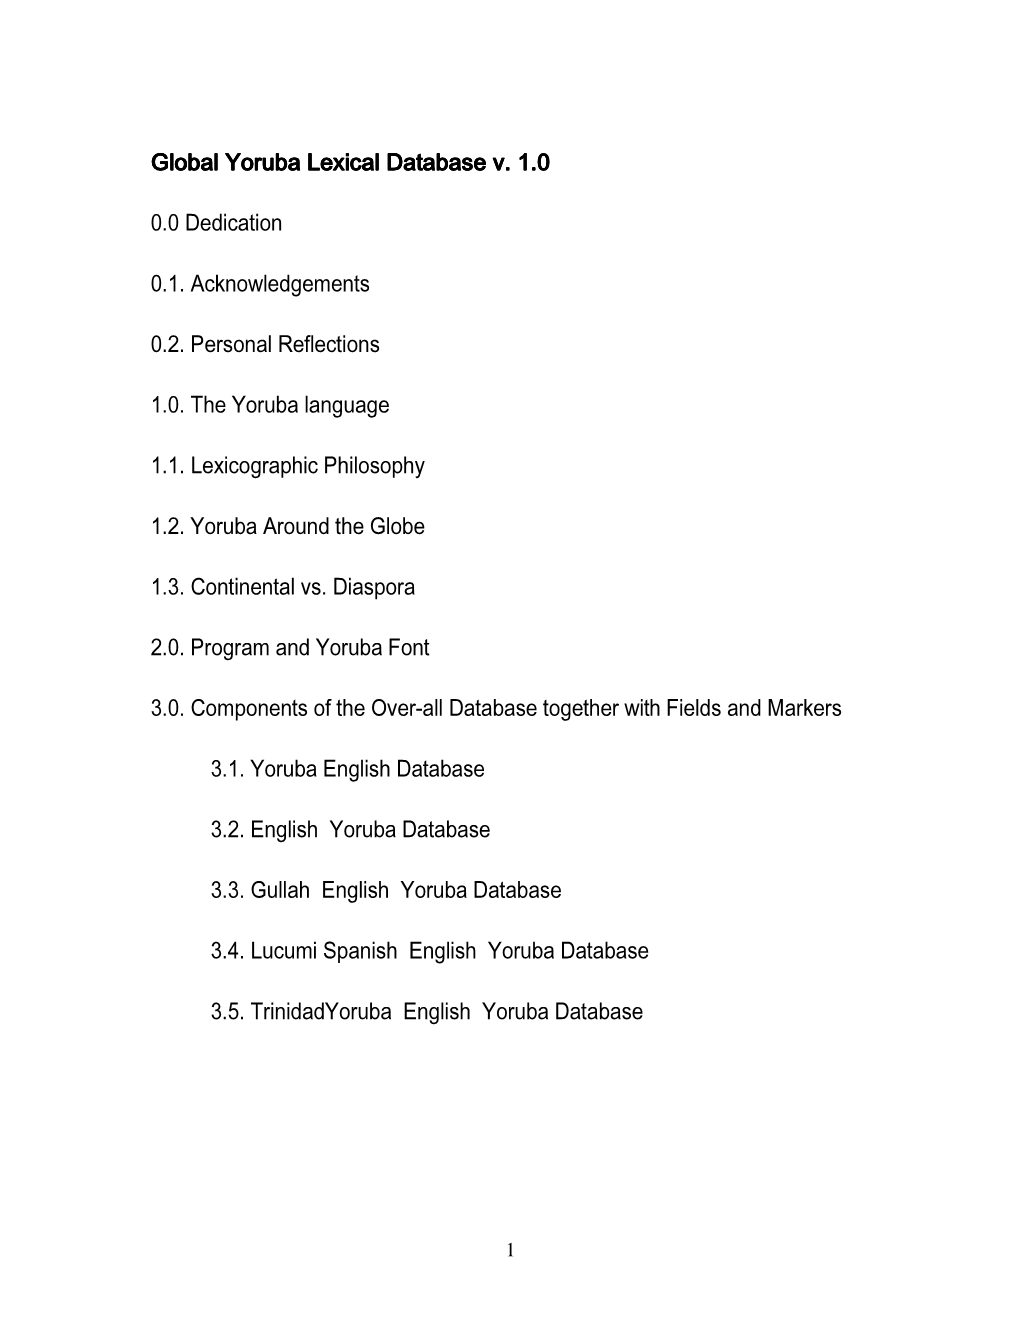 Global Yoruba Lexical Database V. 1.0 Global Yoruba